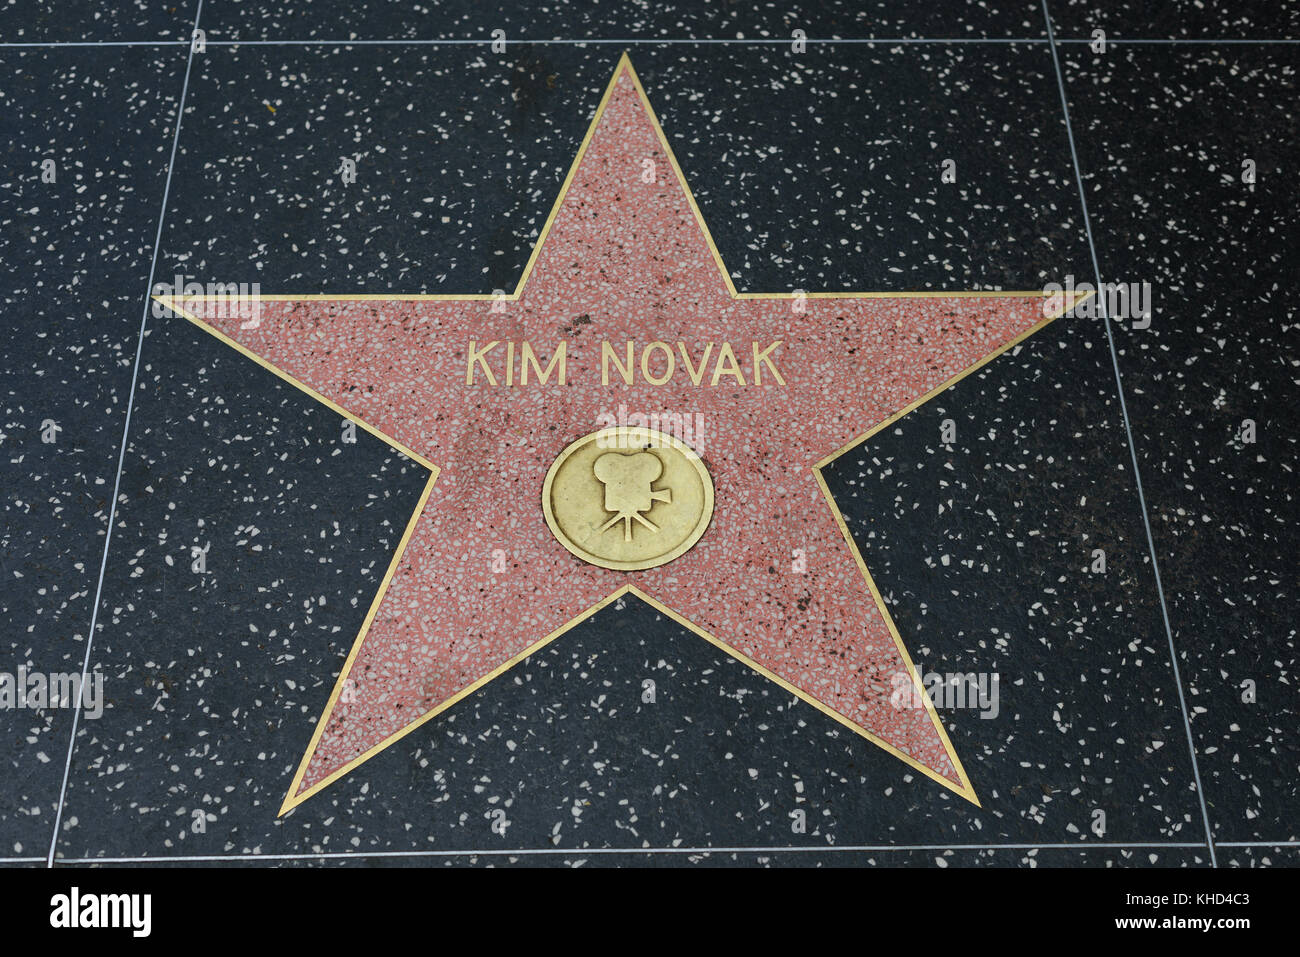 HOLLYWOOD, CA - DEZEMBER 06: Kim Novak Star auf dem Hollywood Walk of Fame in Hollywood, Kalifornien am 6. Dezember 2016. Stockfoto